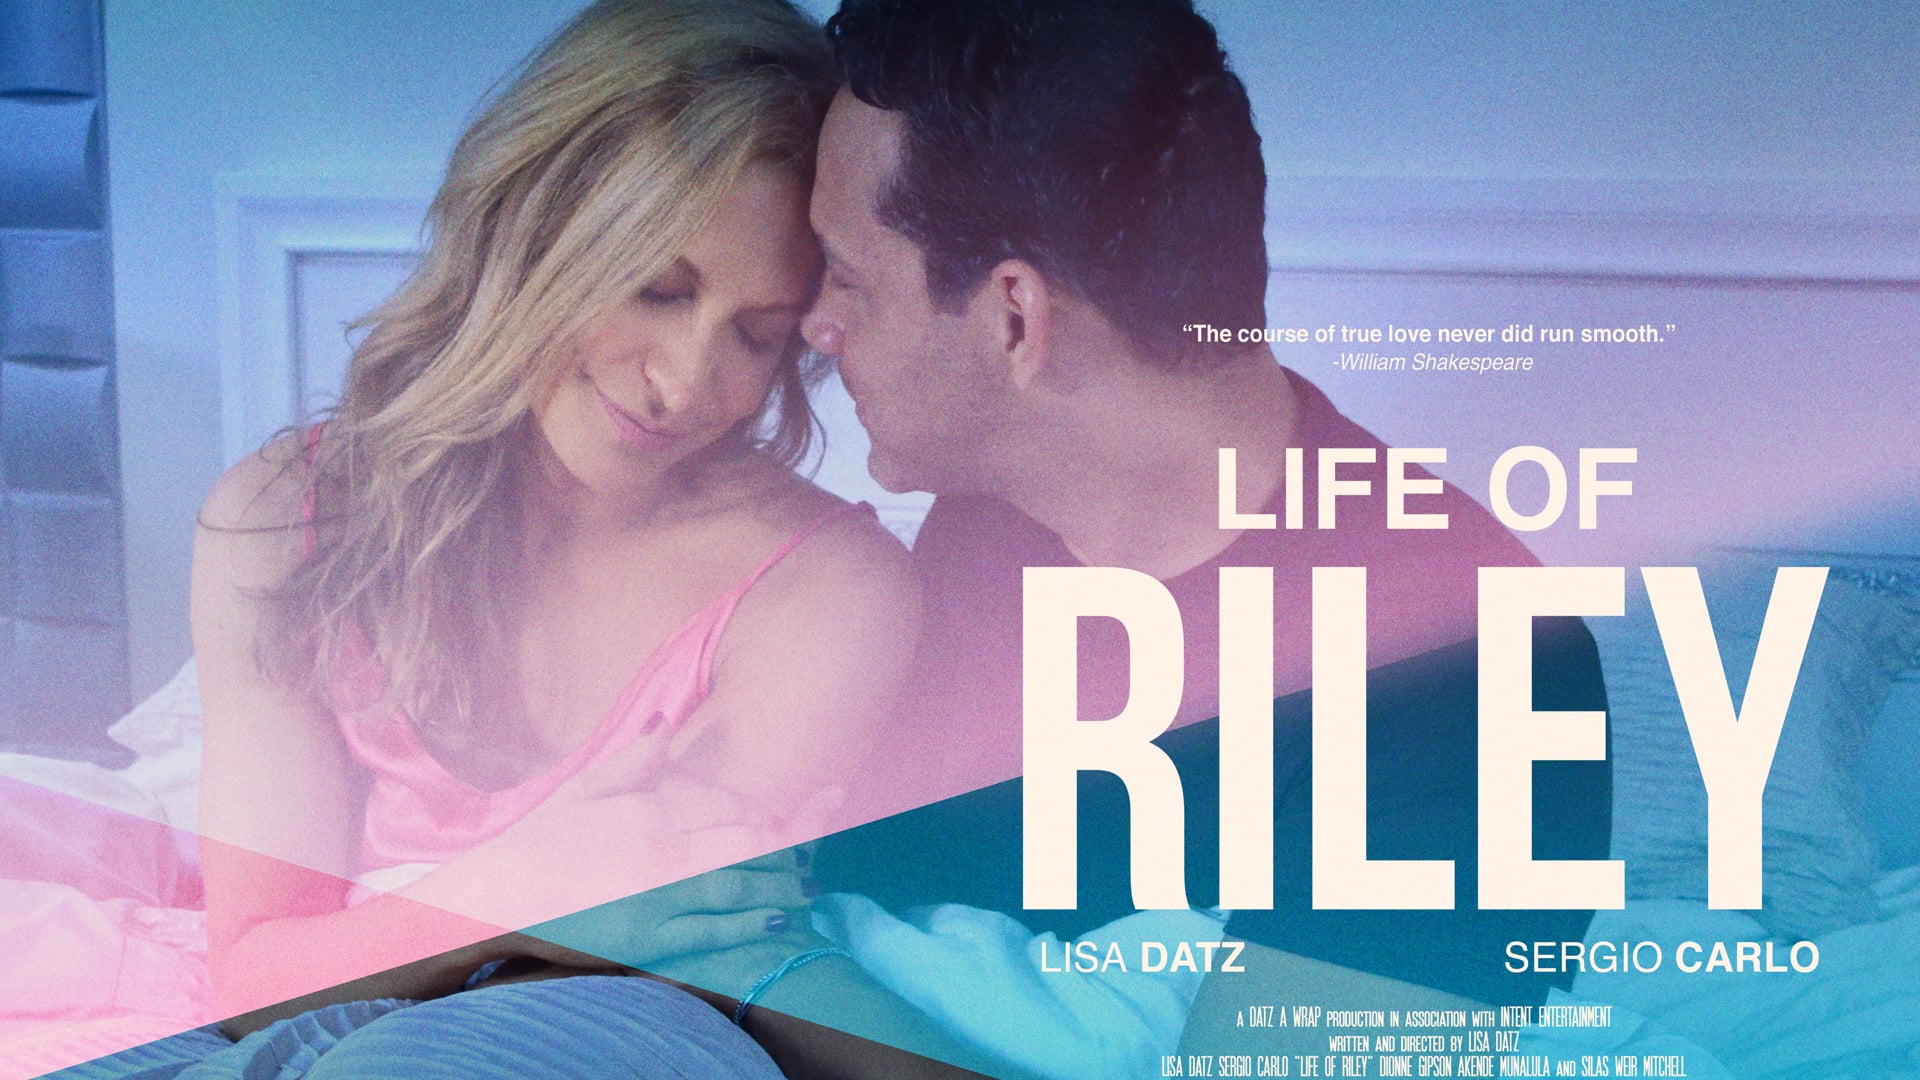 Life of Riley - TRAILER, a short film by Lisa Datz